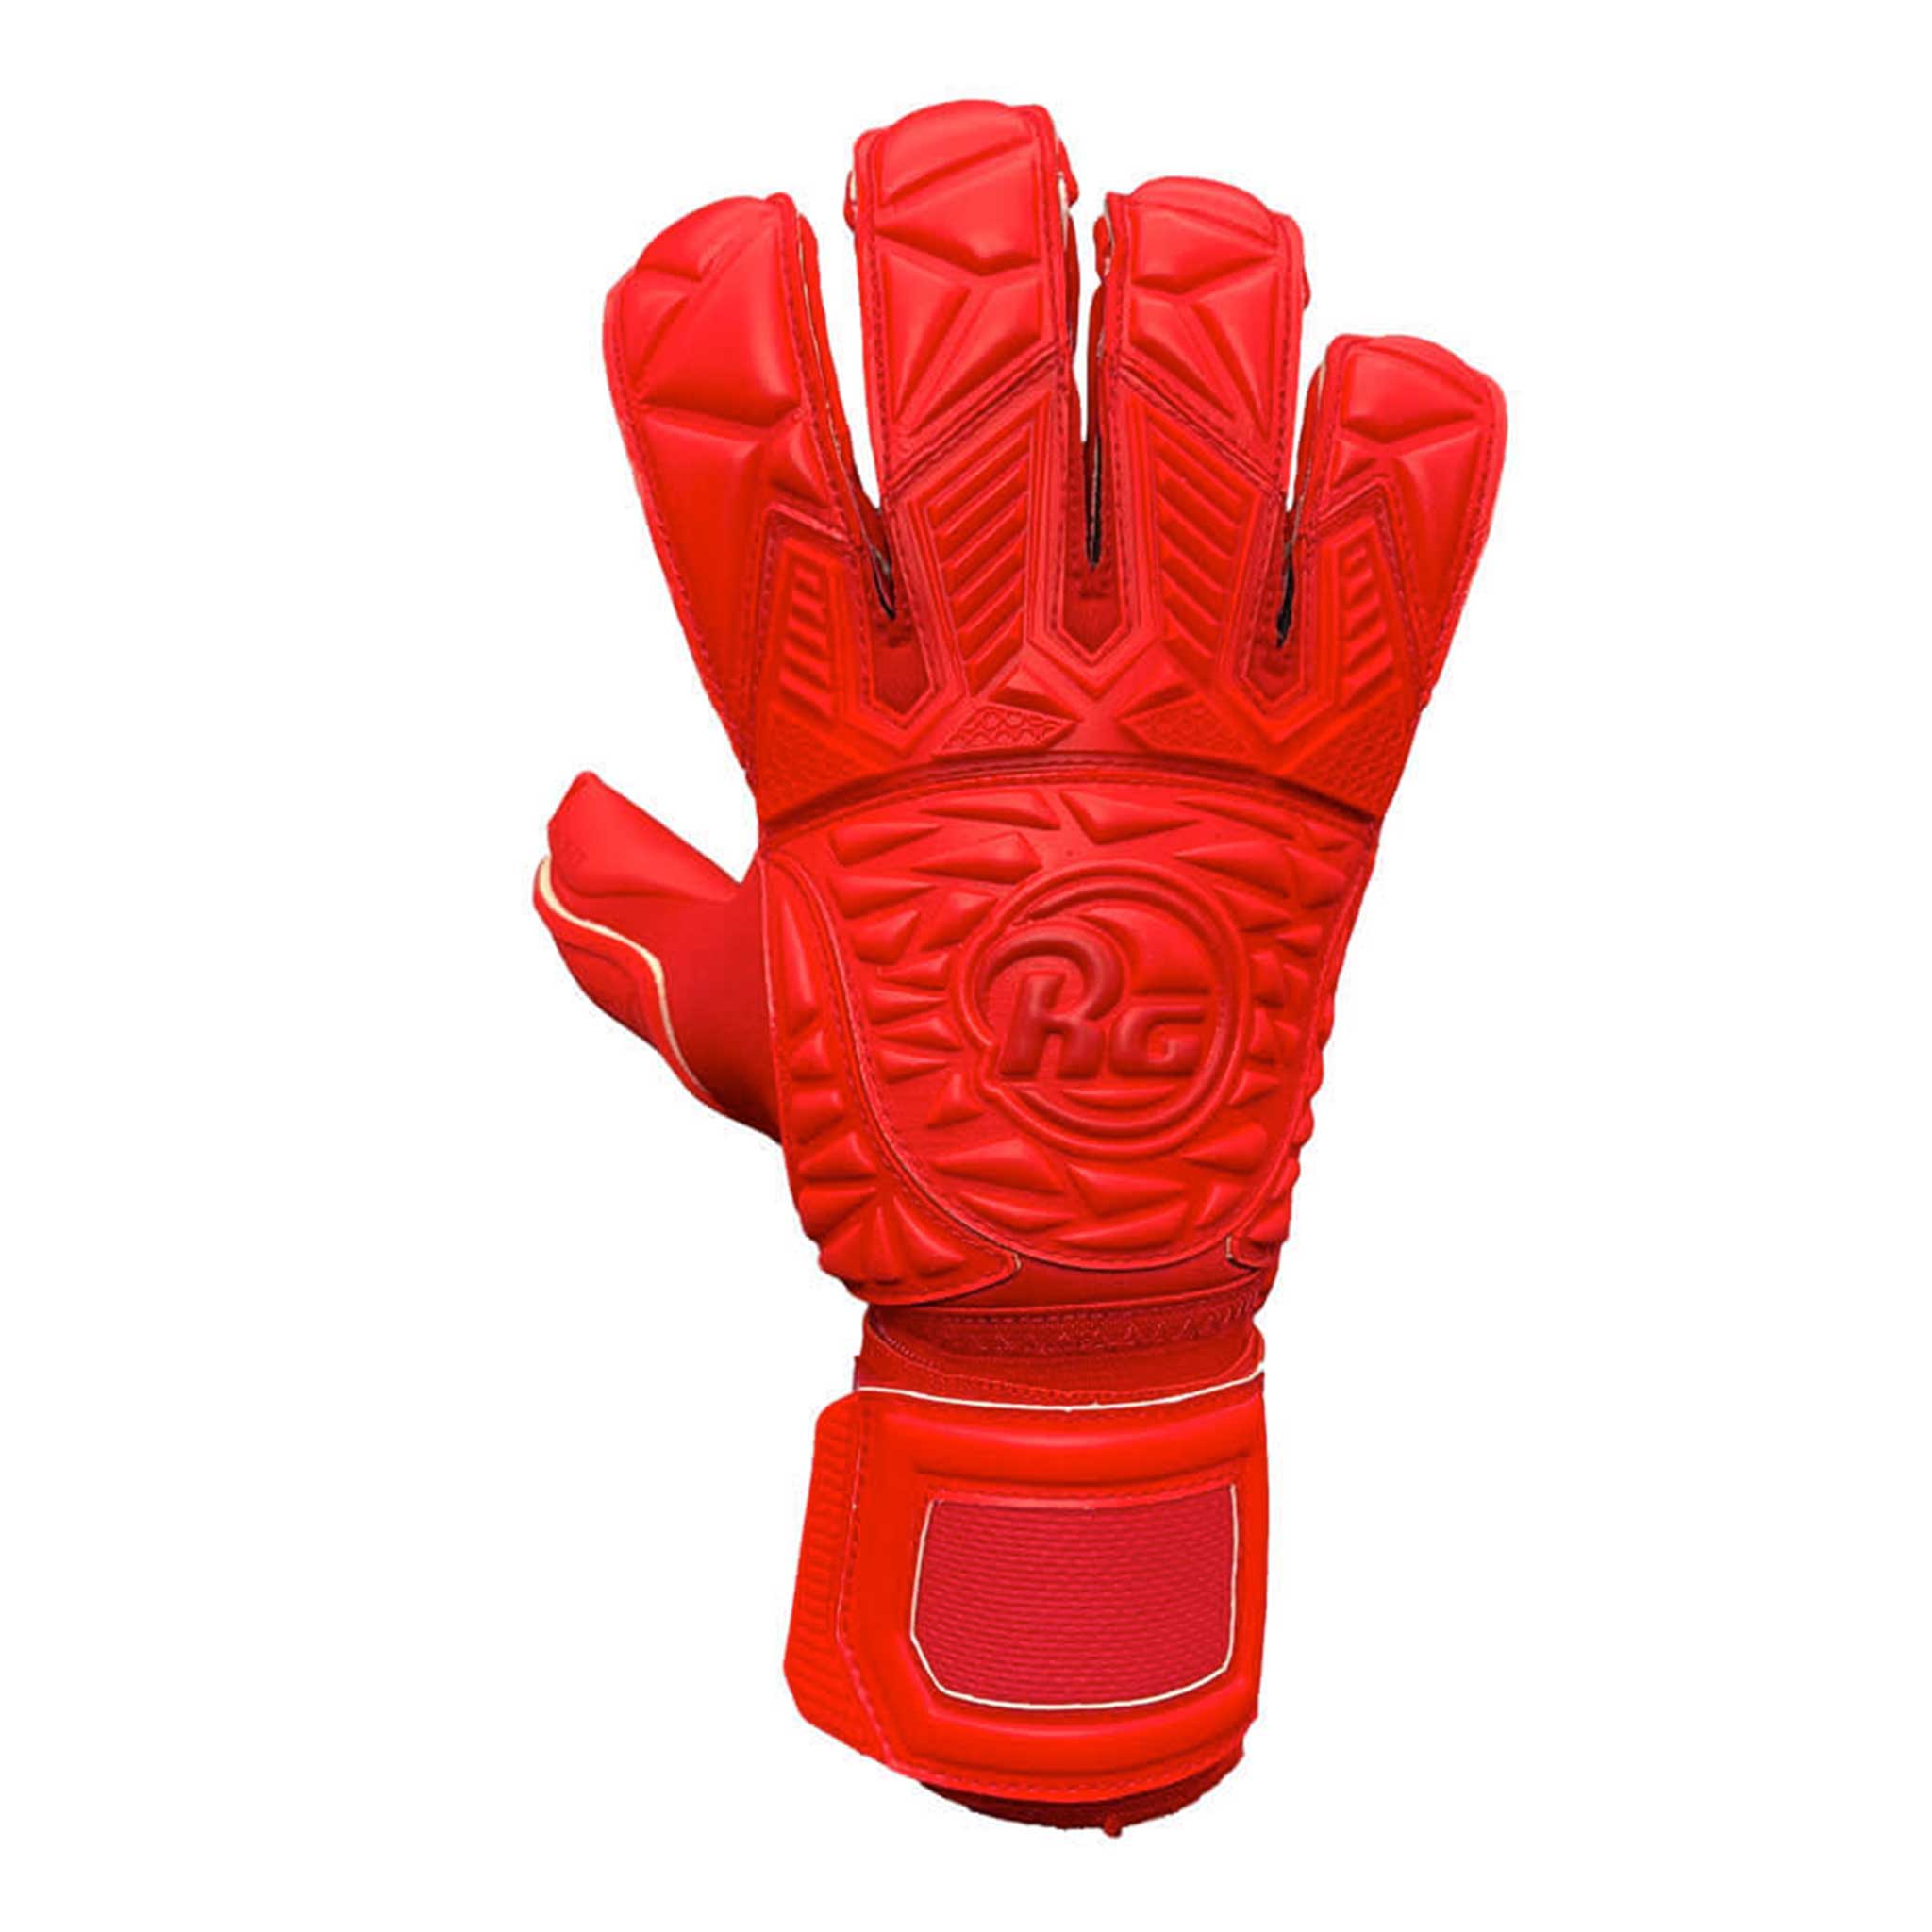 RG Goalkeeper Gloves Snaga Rosso gants de gardien de but de soccer